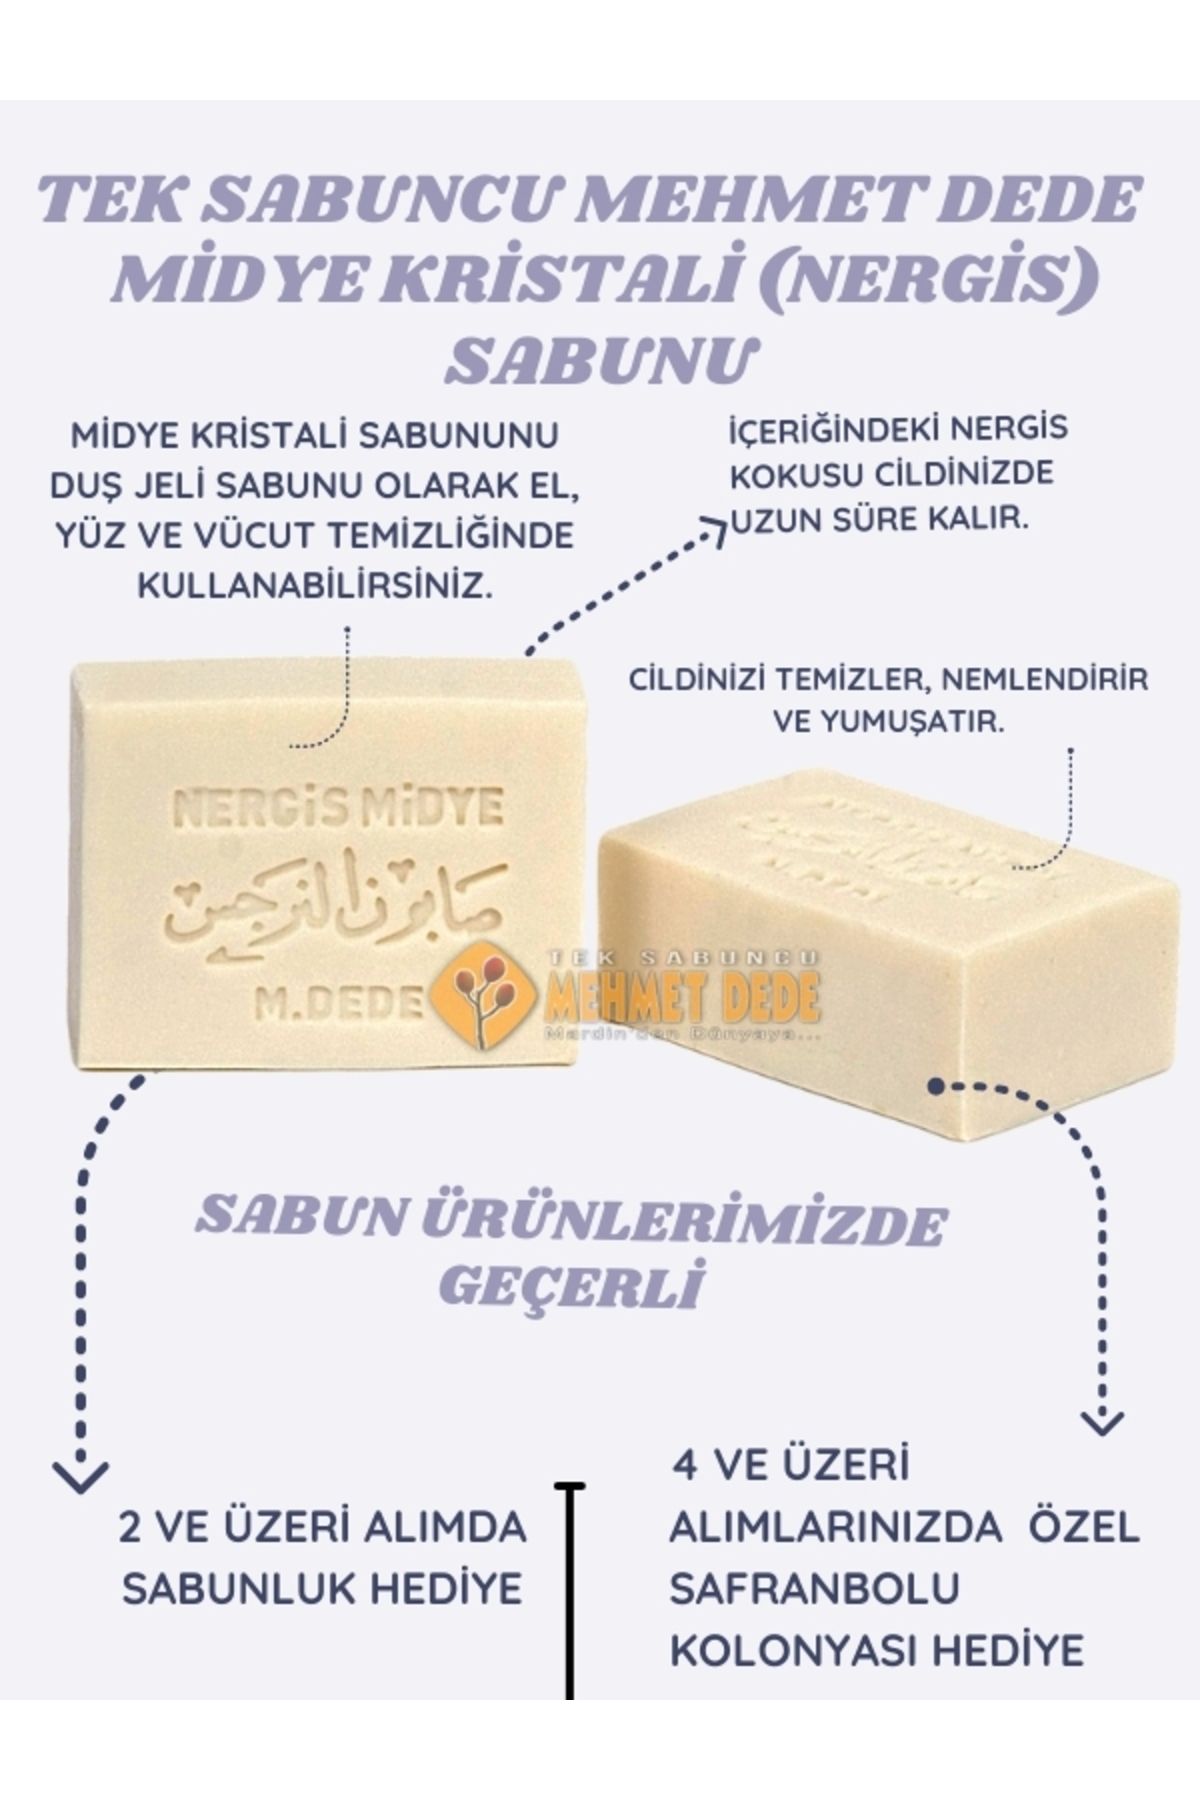 HEPSİ ANADOLU Nergis sabunu-Midye Kristali(mardin mehmet dede)